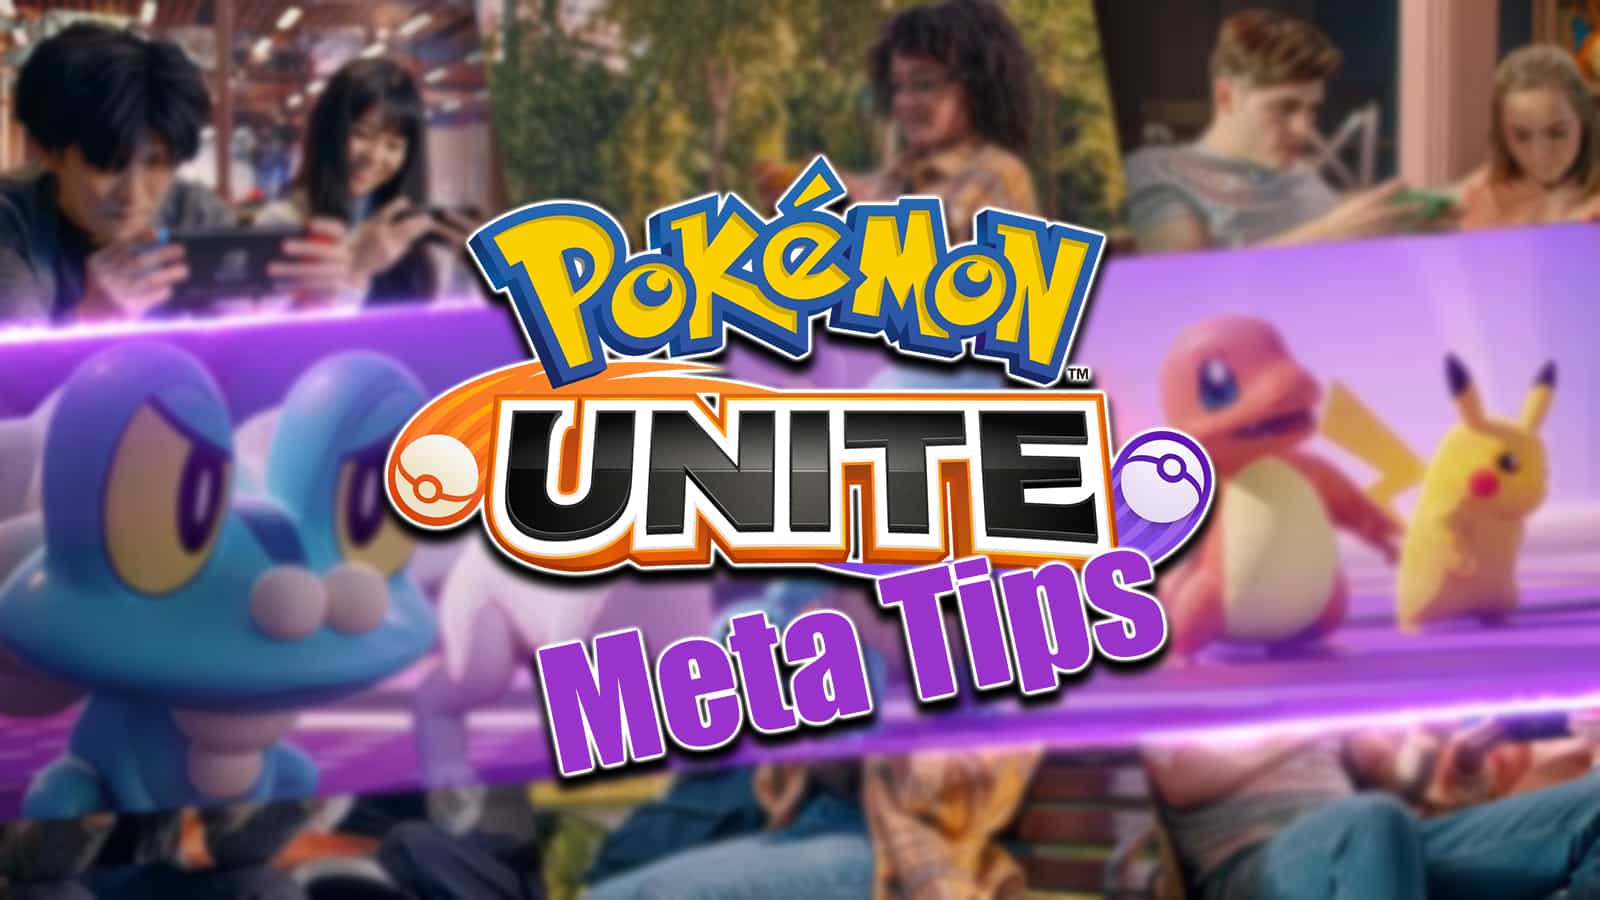 Pokemon Unite Meta tips